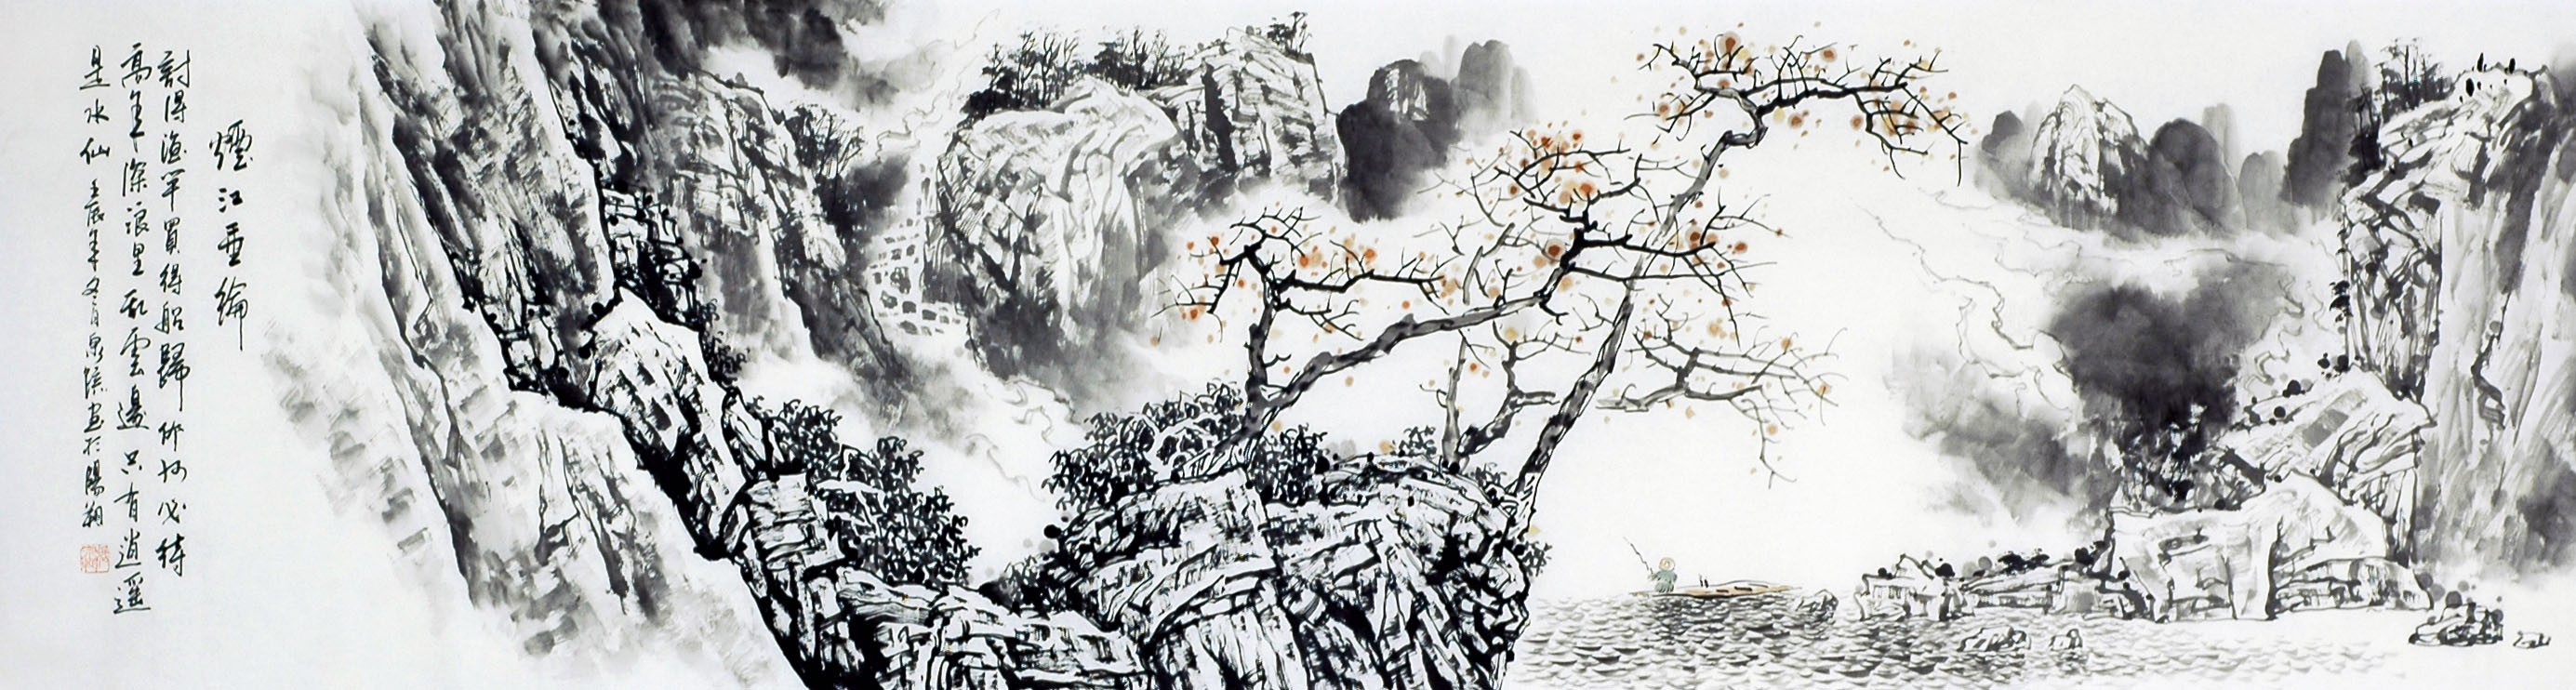 Chinese Aquarene Painting - CNAG008830